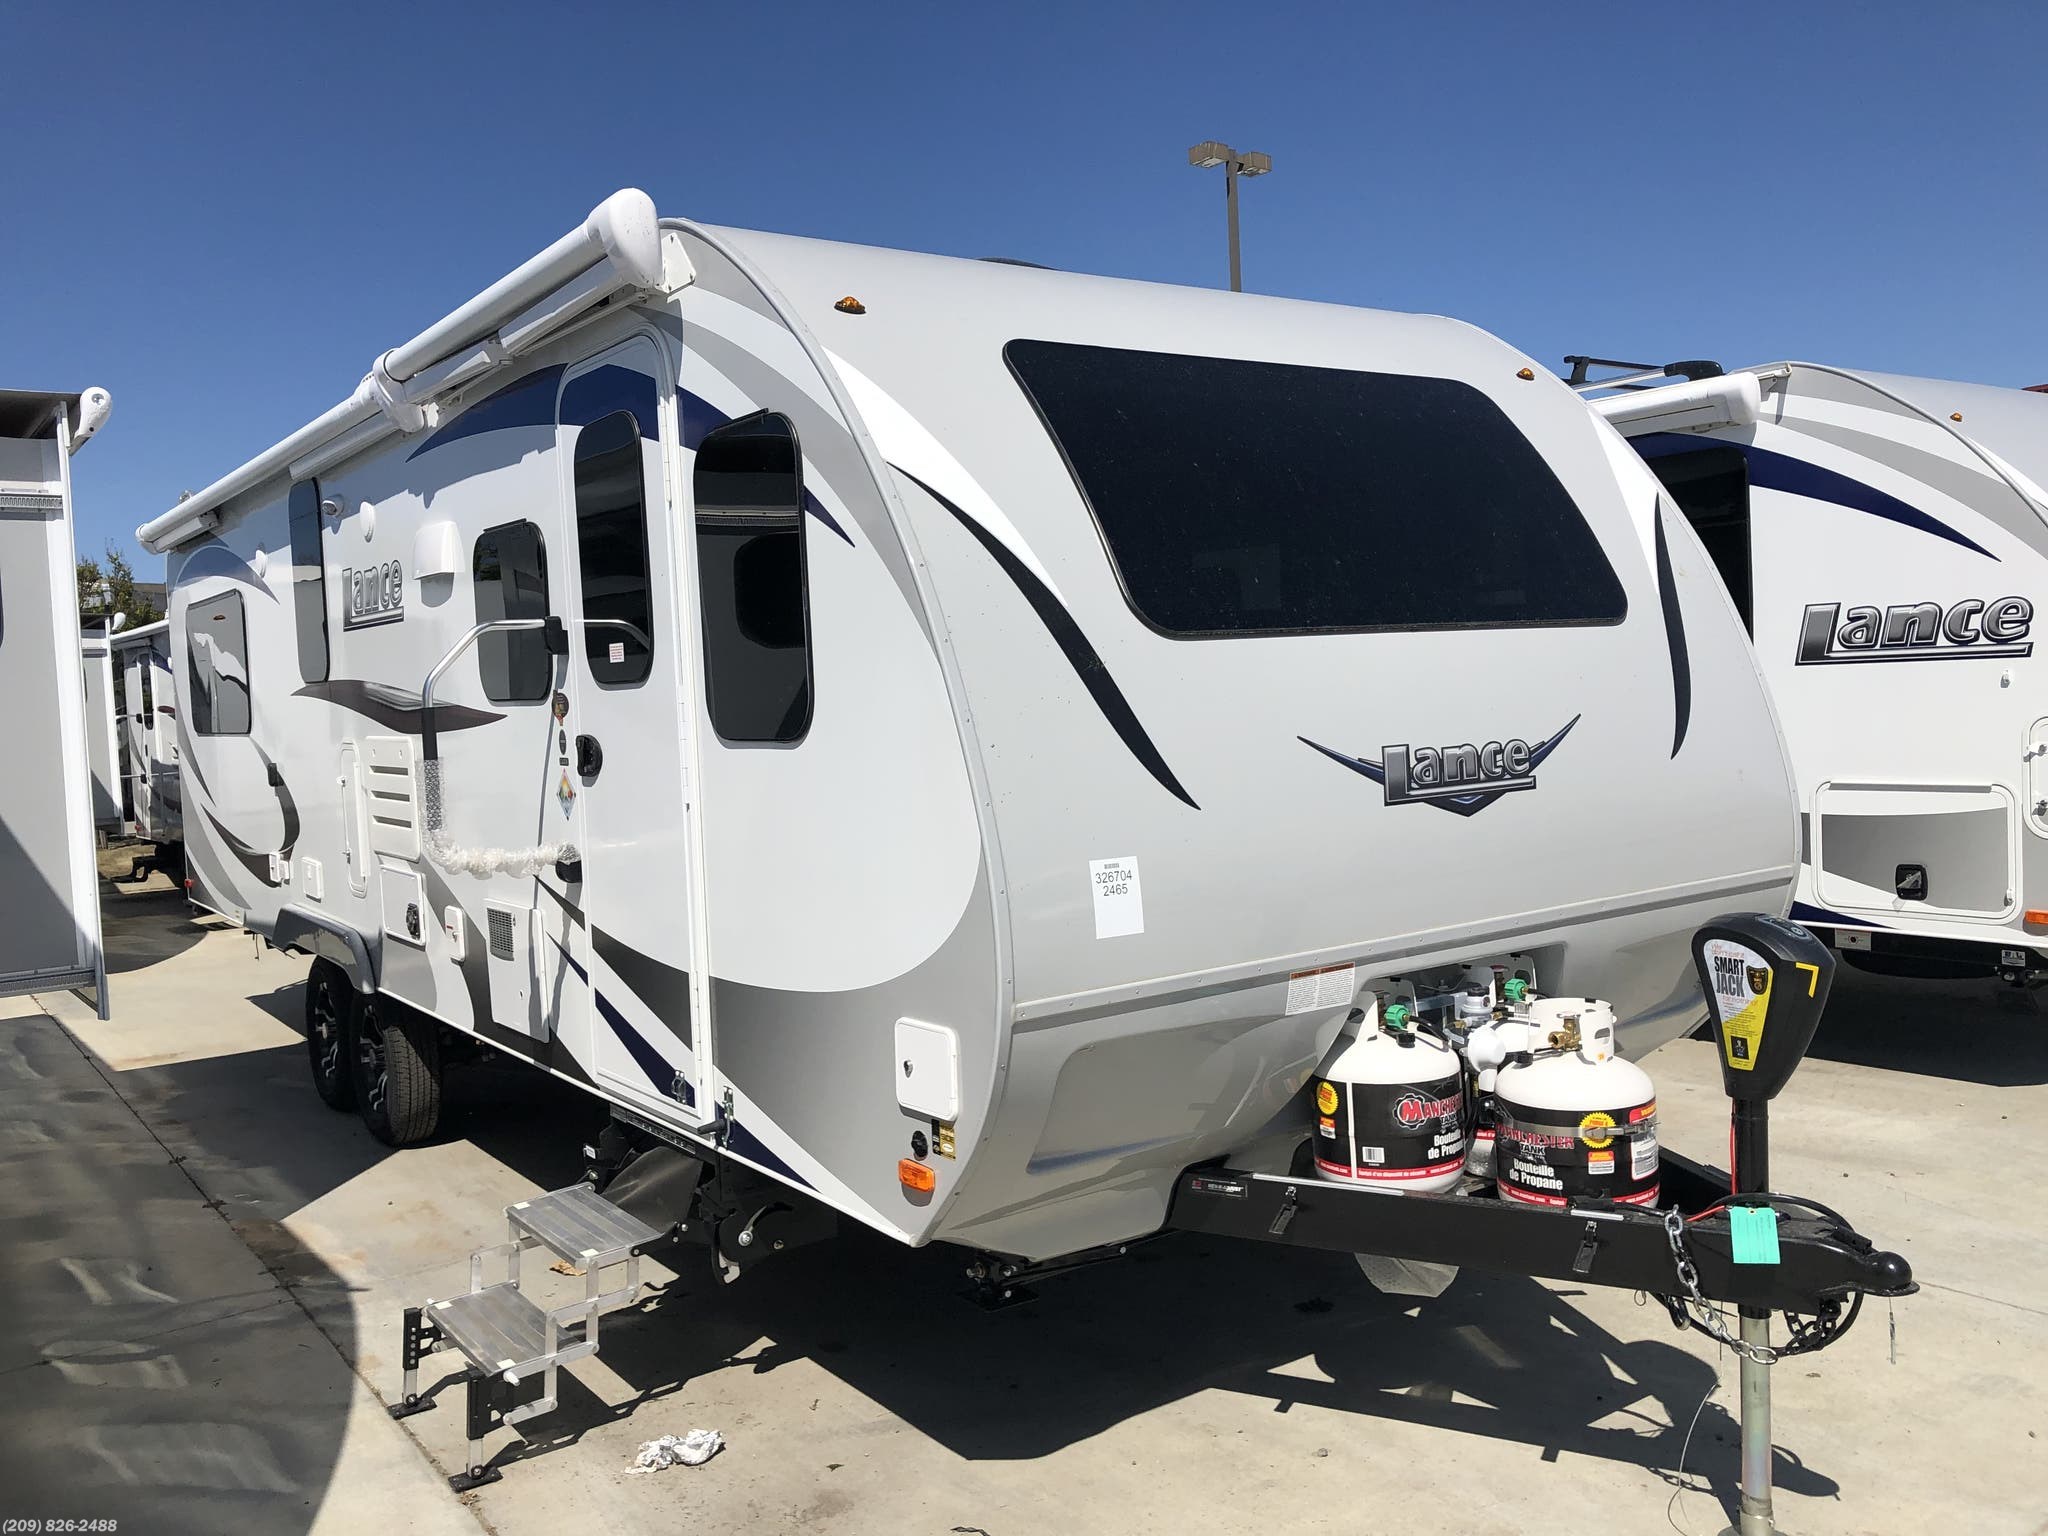 2019 Lance RV TT 2465 for Sale in Los Banos, CA 93635 ...